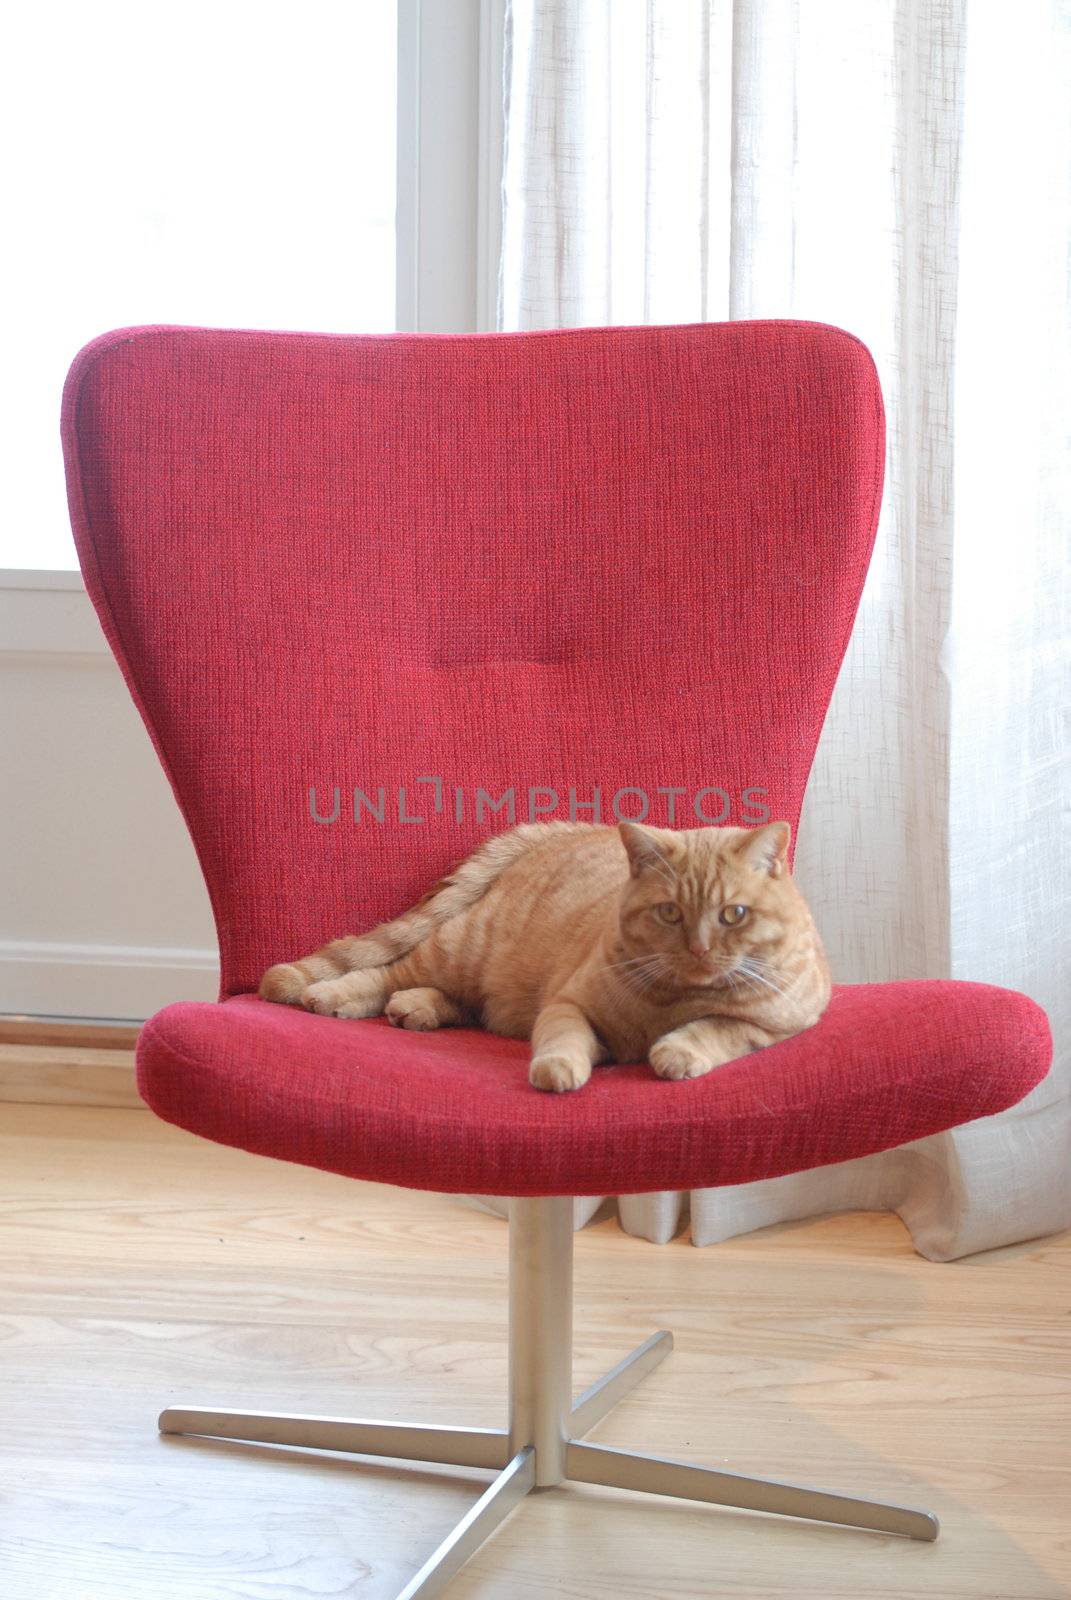 Cat in red chair by Bildehagen